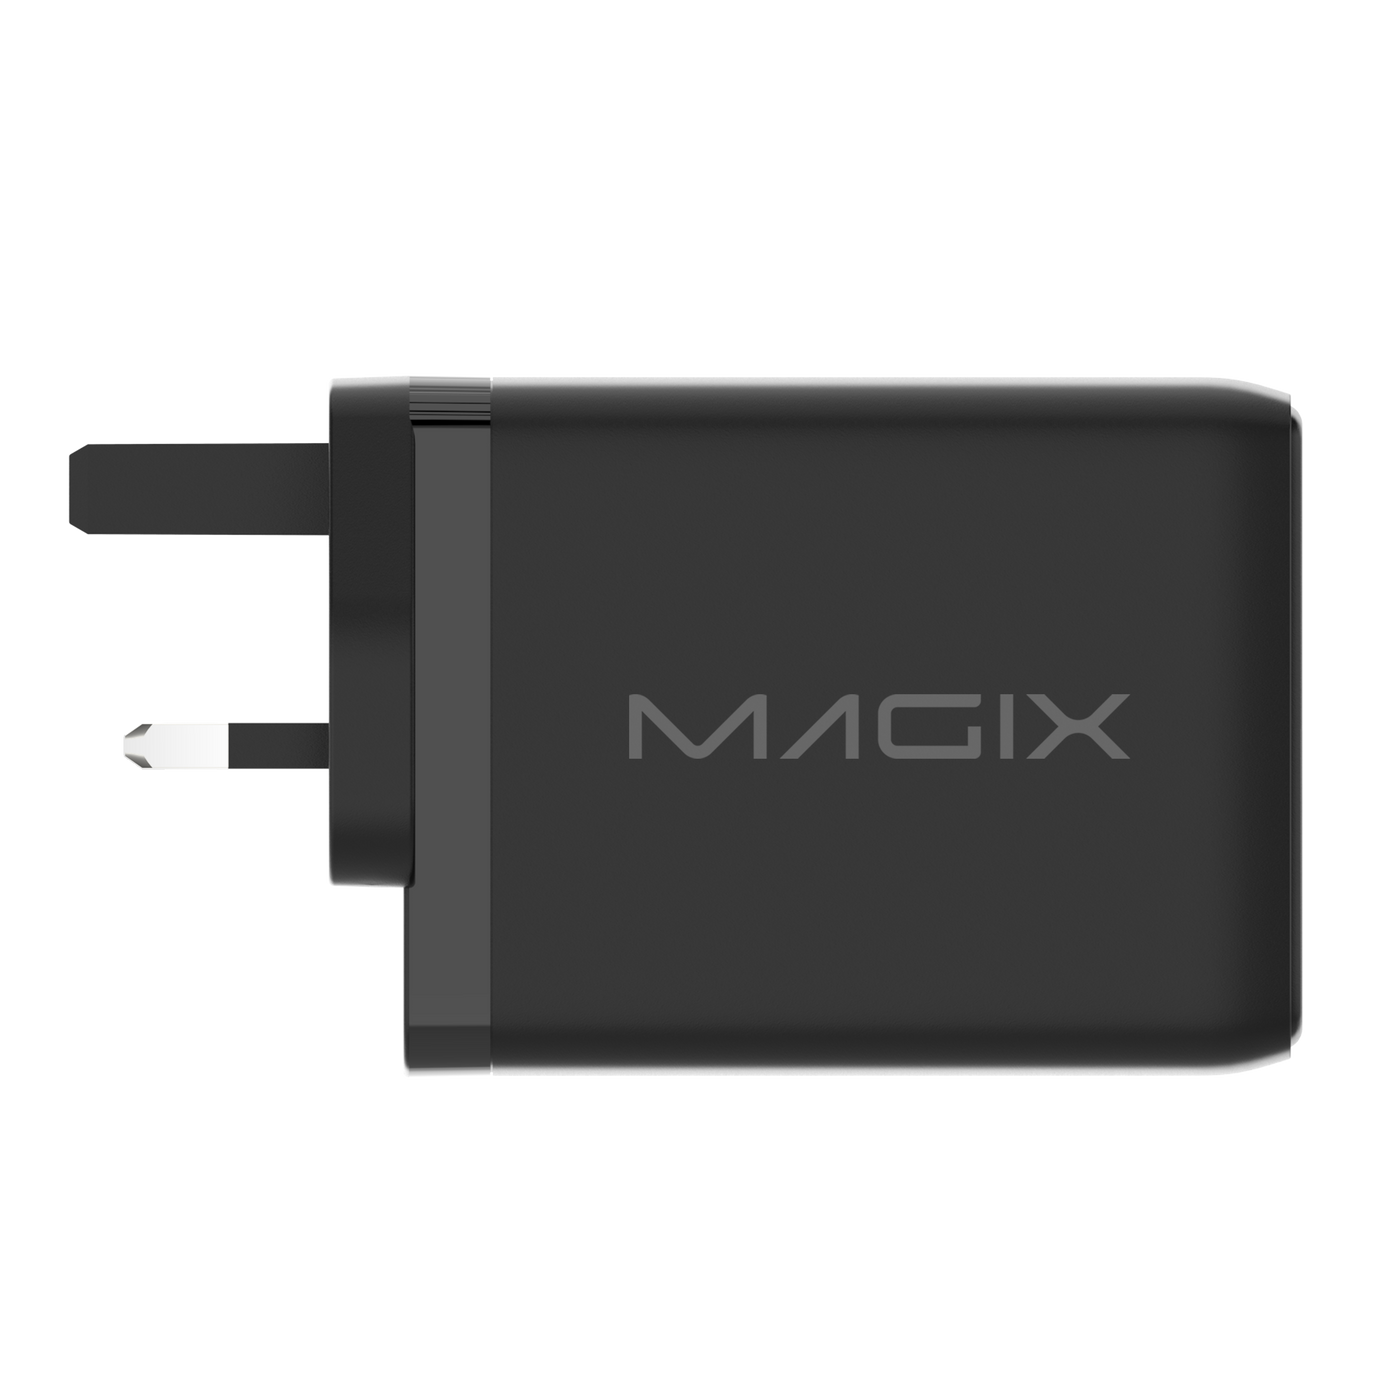 MAGIX 120W 4-Port Plug, GaN Charger PD Power Delivery - UK Plug